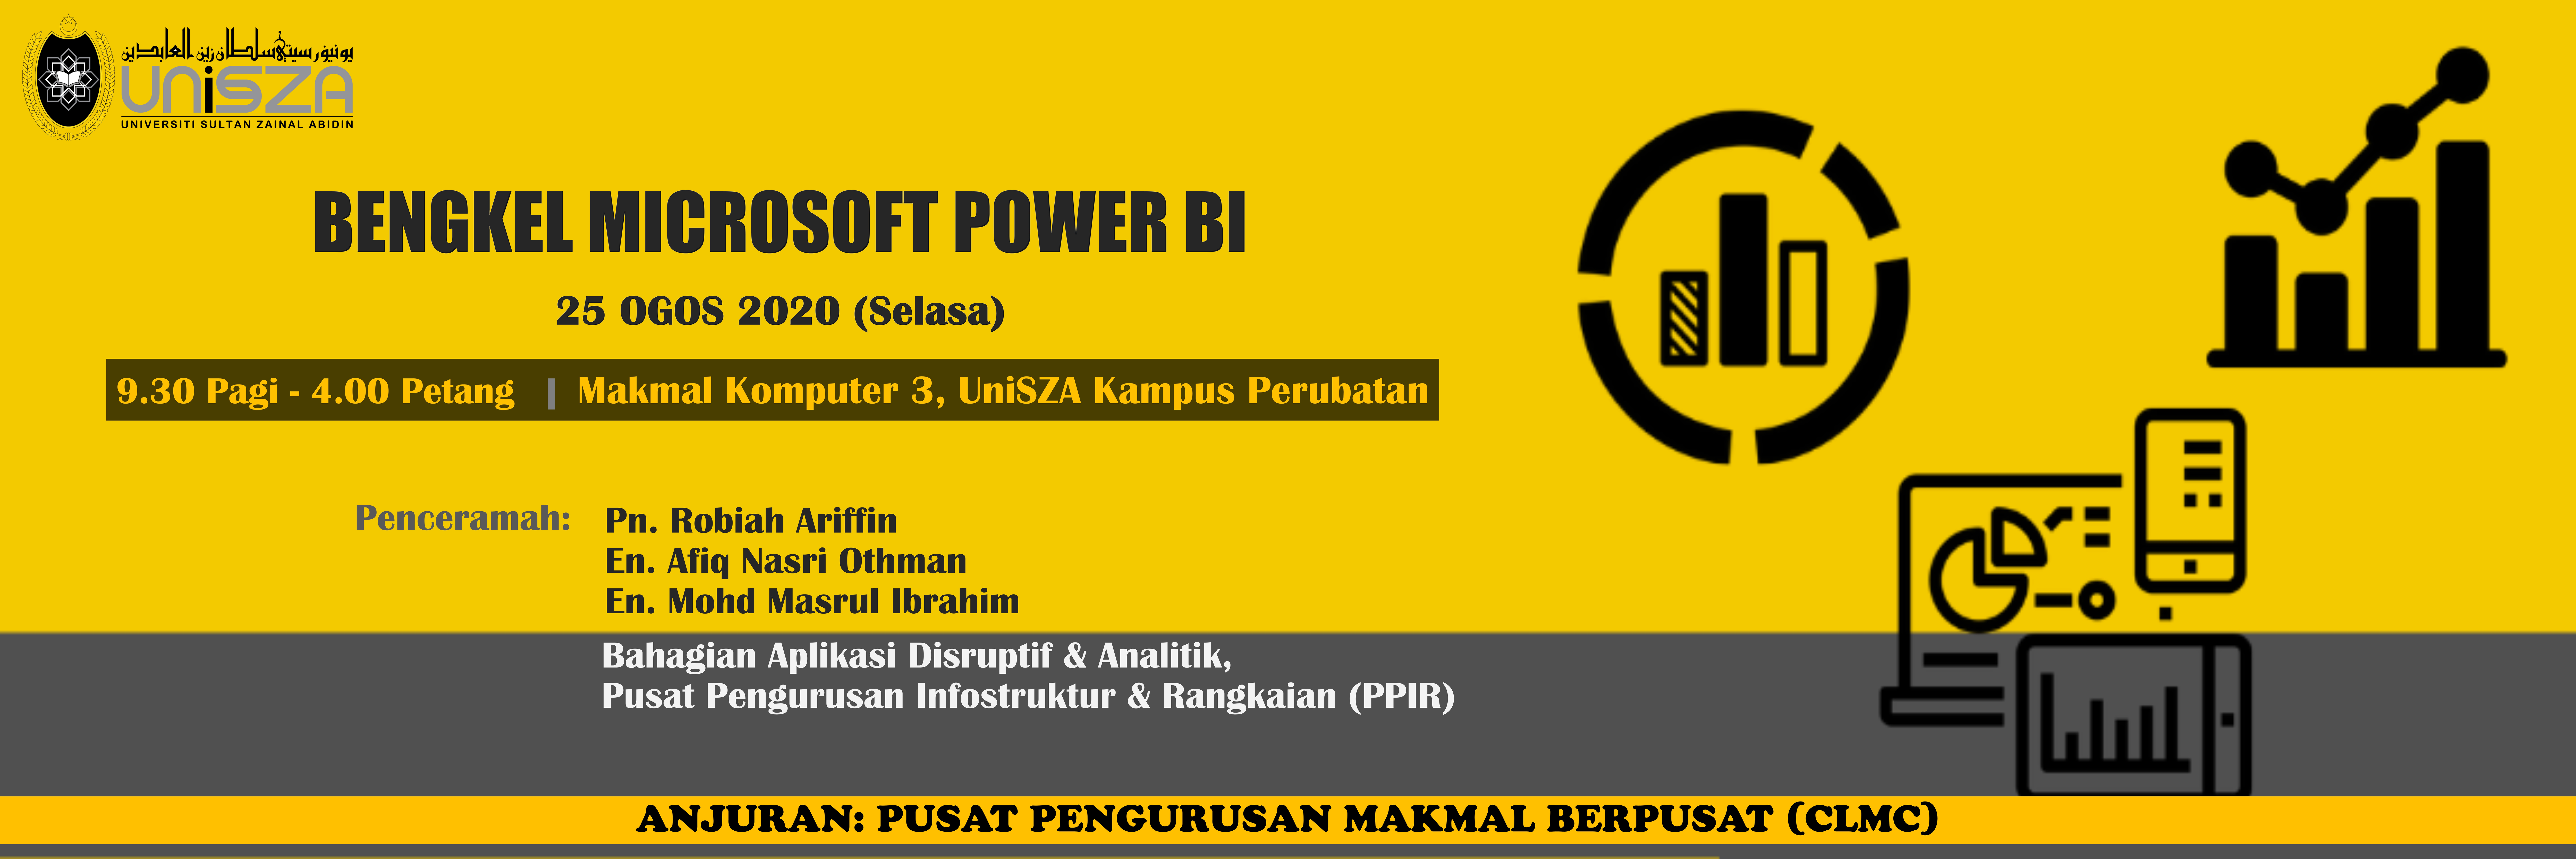 Banner Bengkel Microsoft Power BI